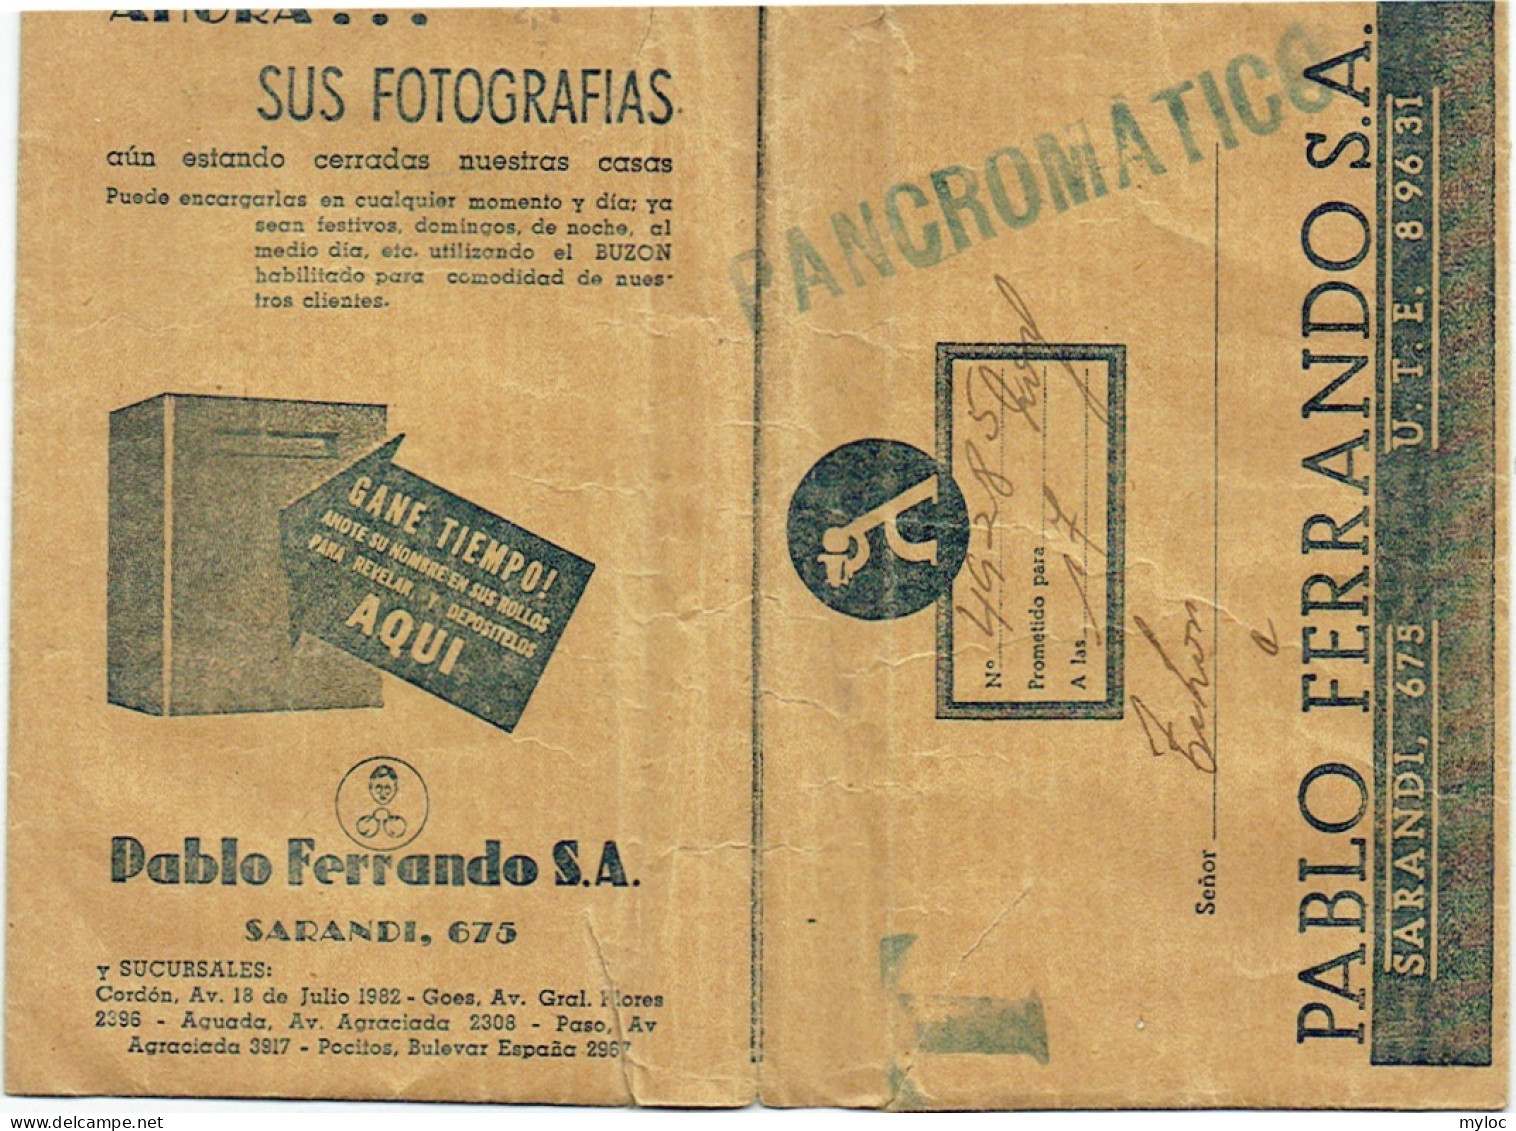 Foto/Photo. Pablo Ferrando, Sarandi, Uruguay. Ancienne Pochette Vide. - Matériel & Accessoires